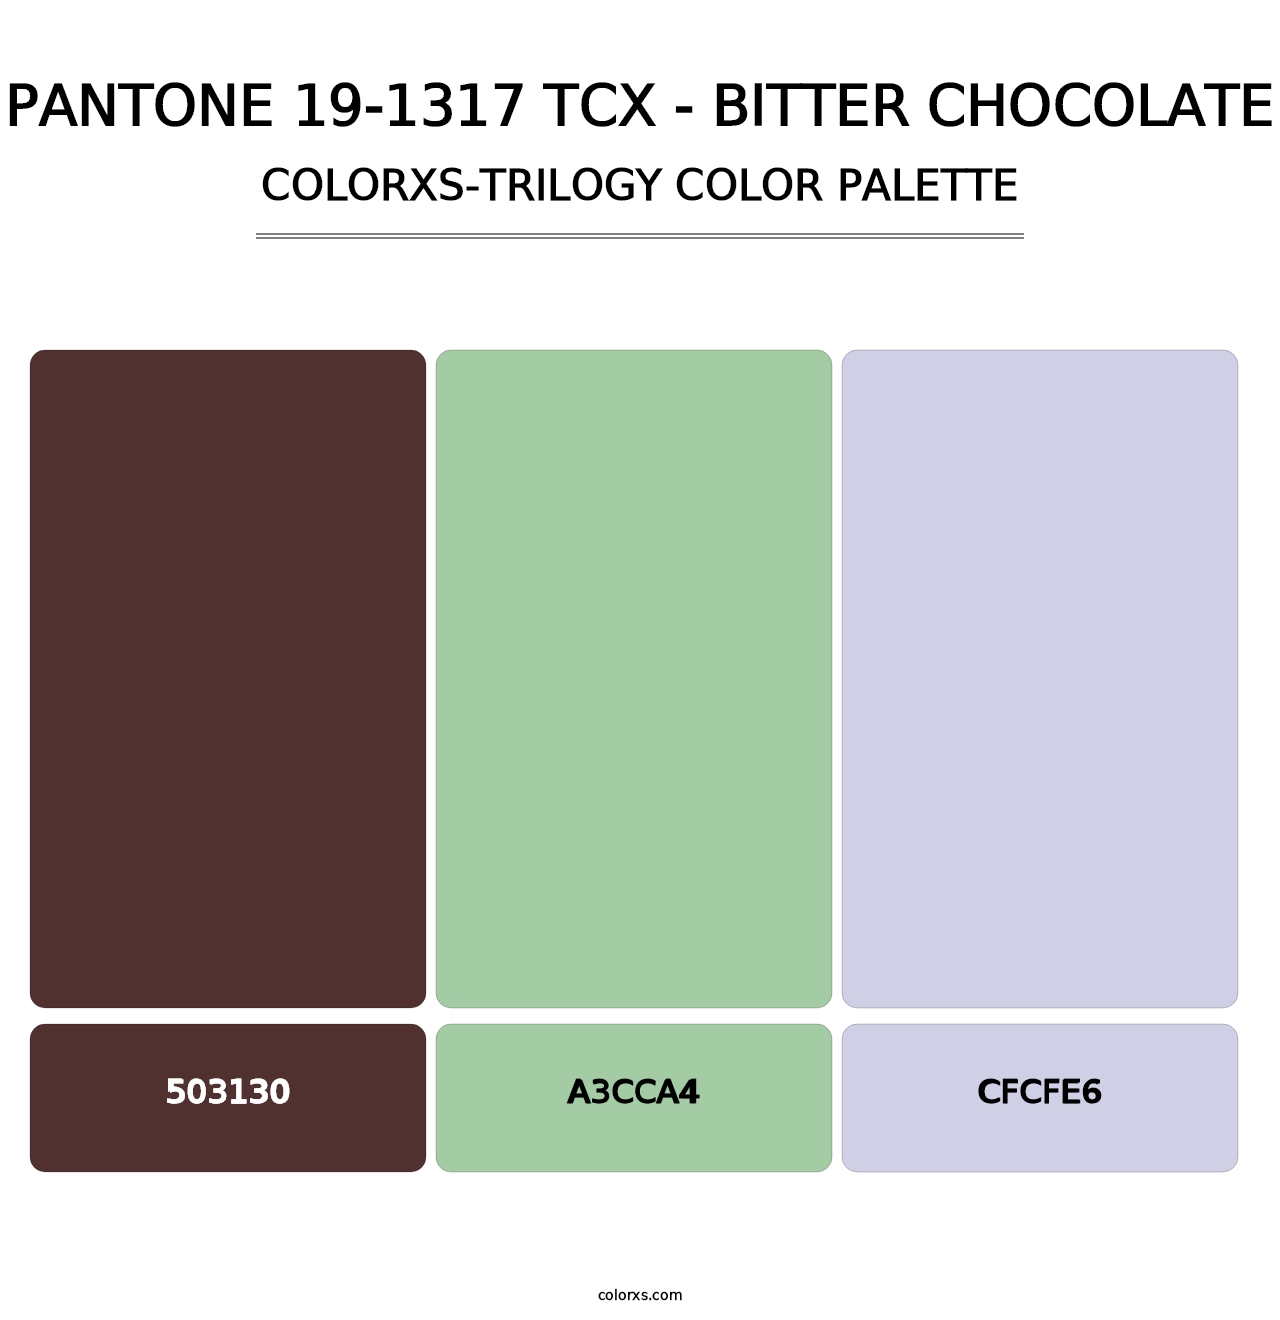 PANTONE 19-1317 TCX - Bitter Chocolate - Colorxs Trilogy Palette